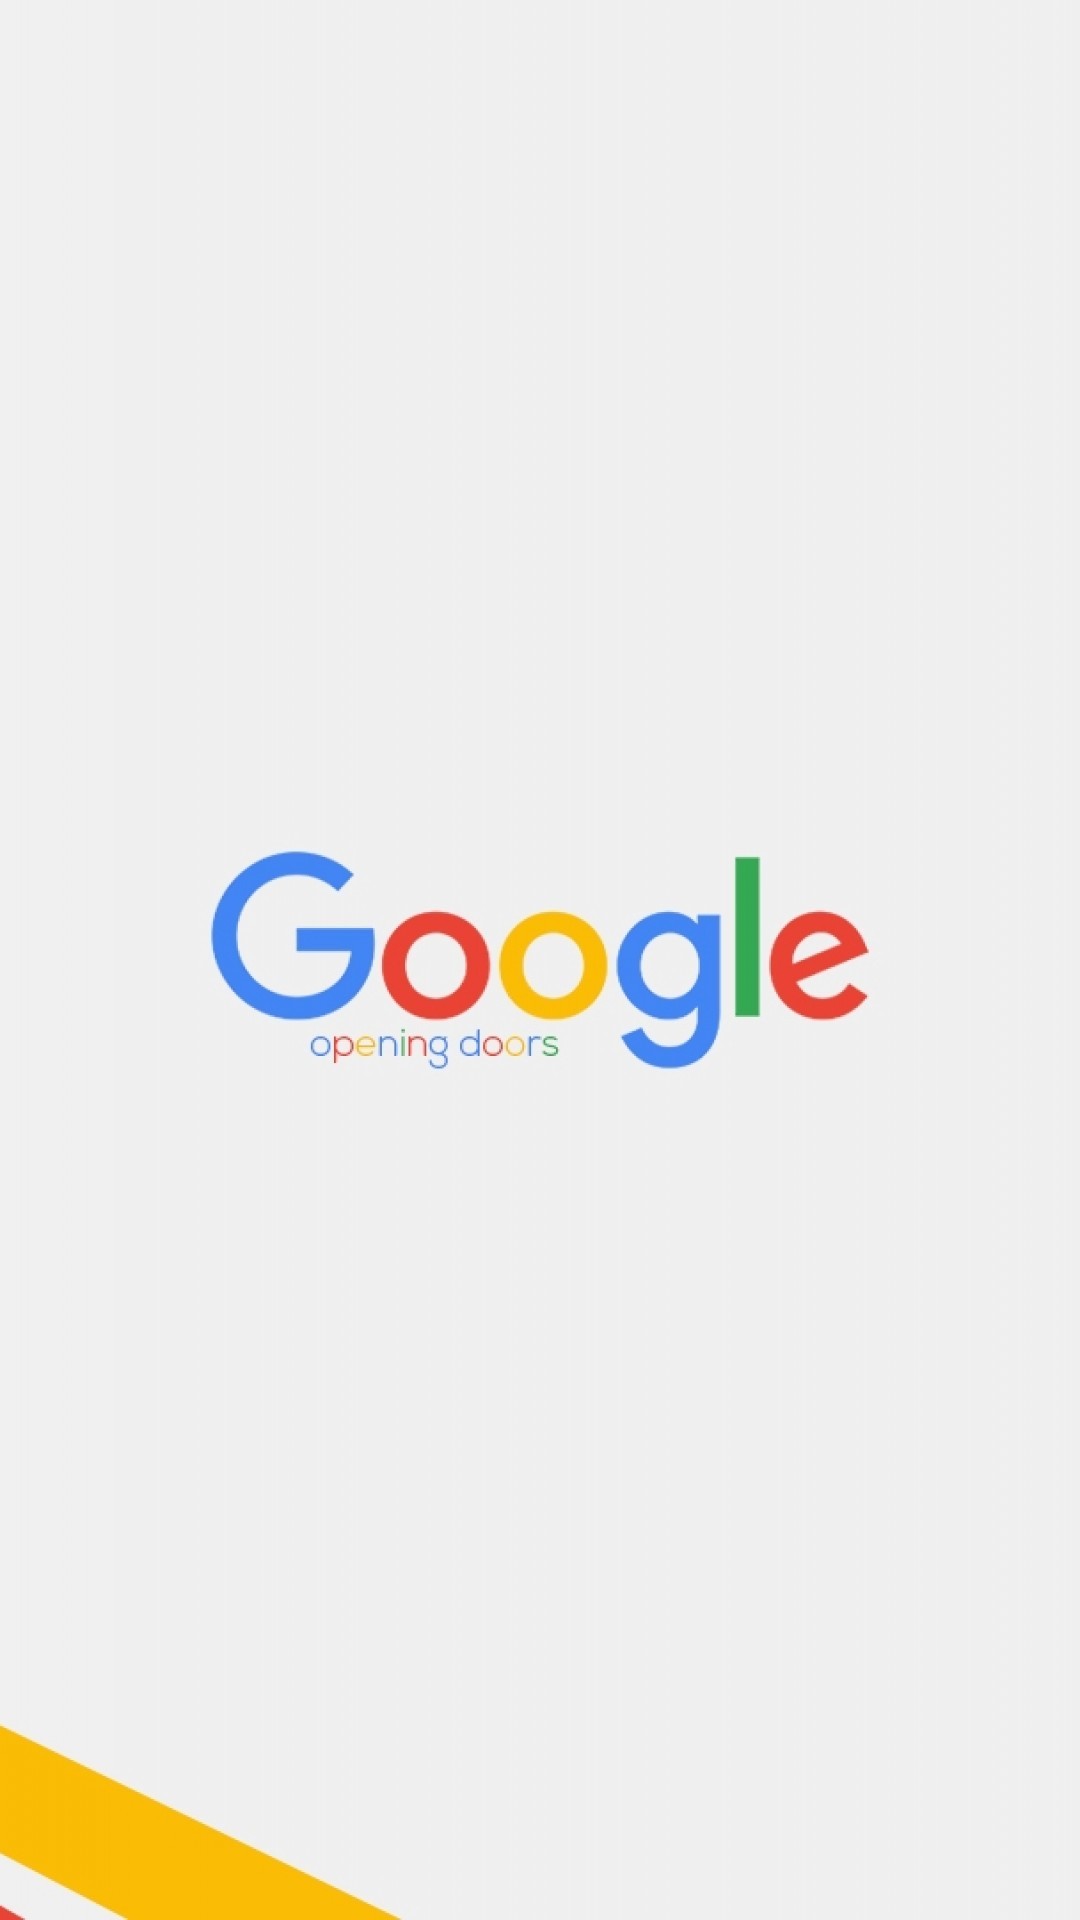 Google Wallpaper Download - Google Logo Wallpaper 4k - 1080x1920 Wallpaper  